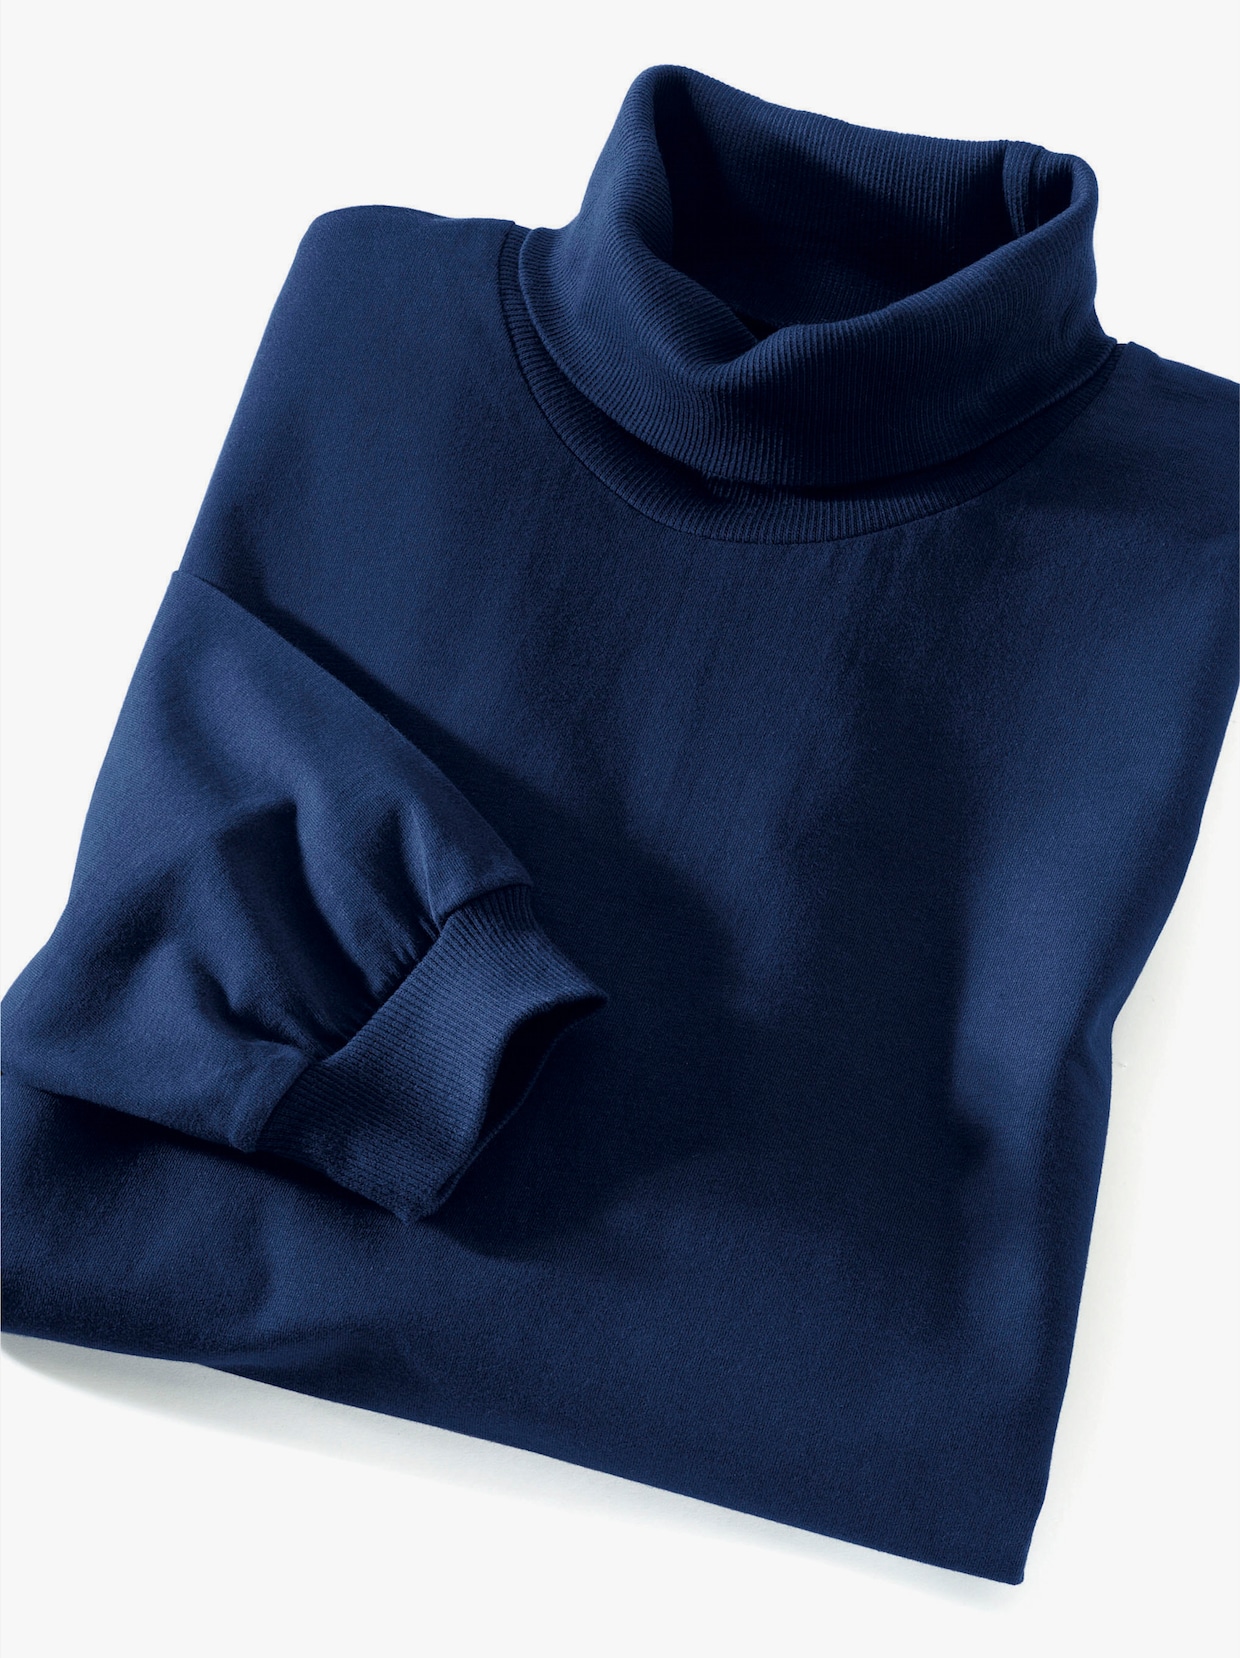 Tričko s rolákovým golierom - námornícka modrá